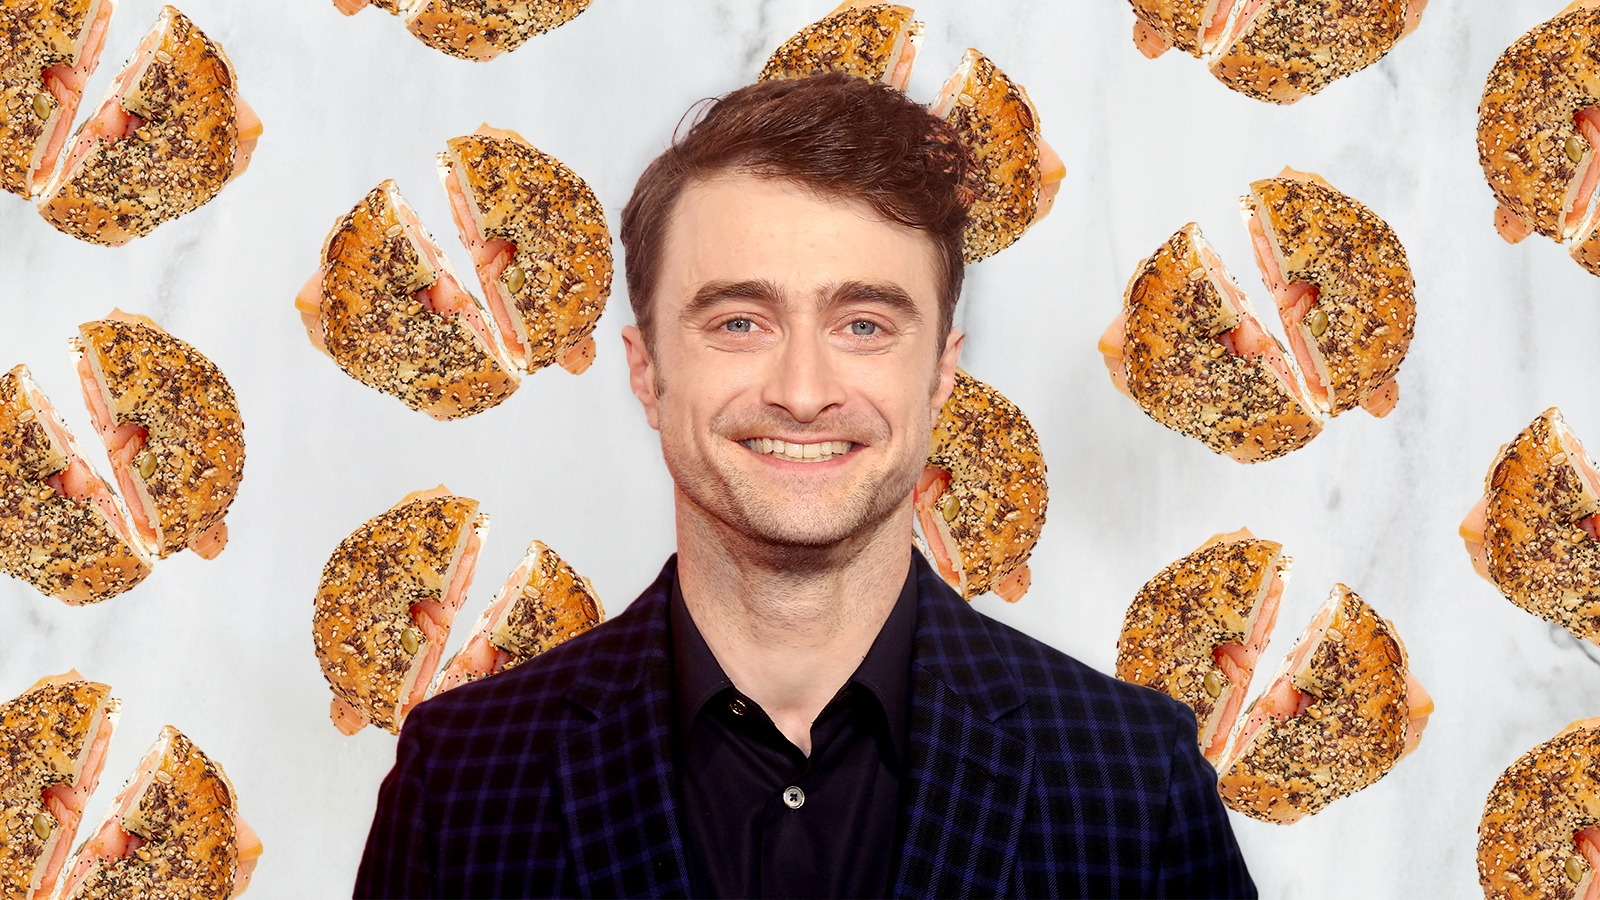 Daniel Radcliffe bagel